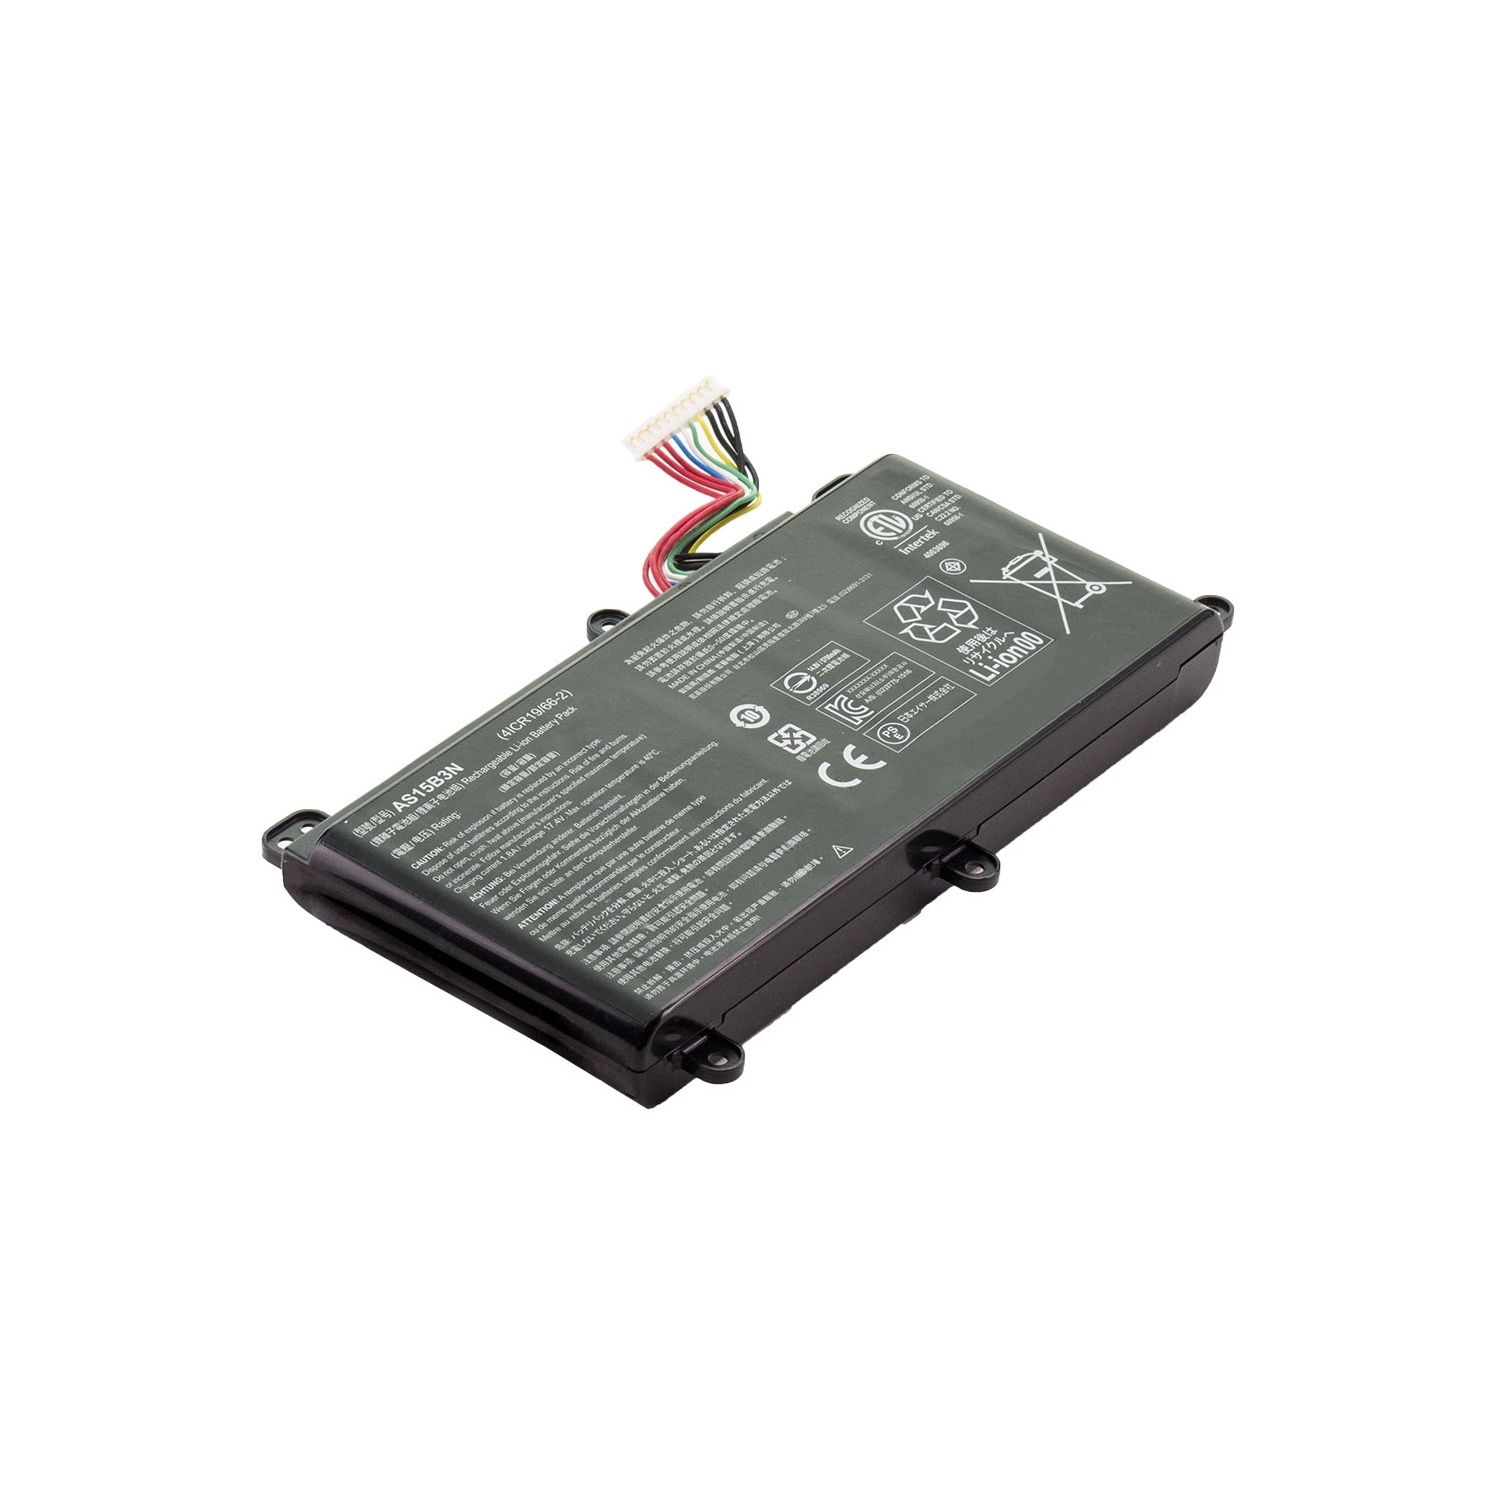 BATTDEPOT NEW Laptop Battery for Acer Predator 15 G9-592-73W6 AS15B3N KT.00803.004 KT.00803.005